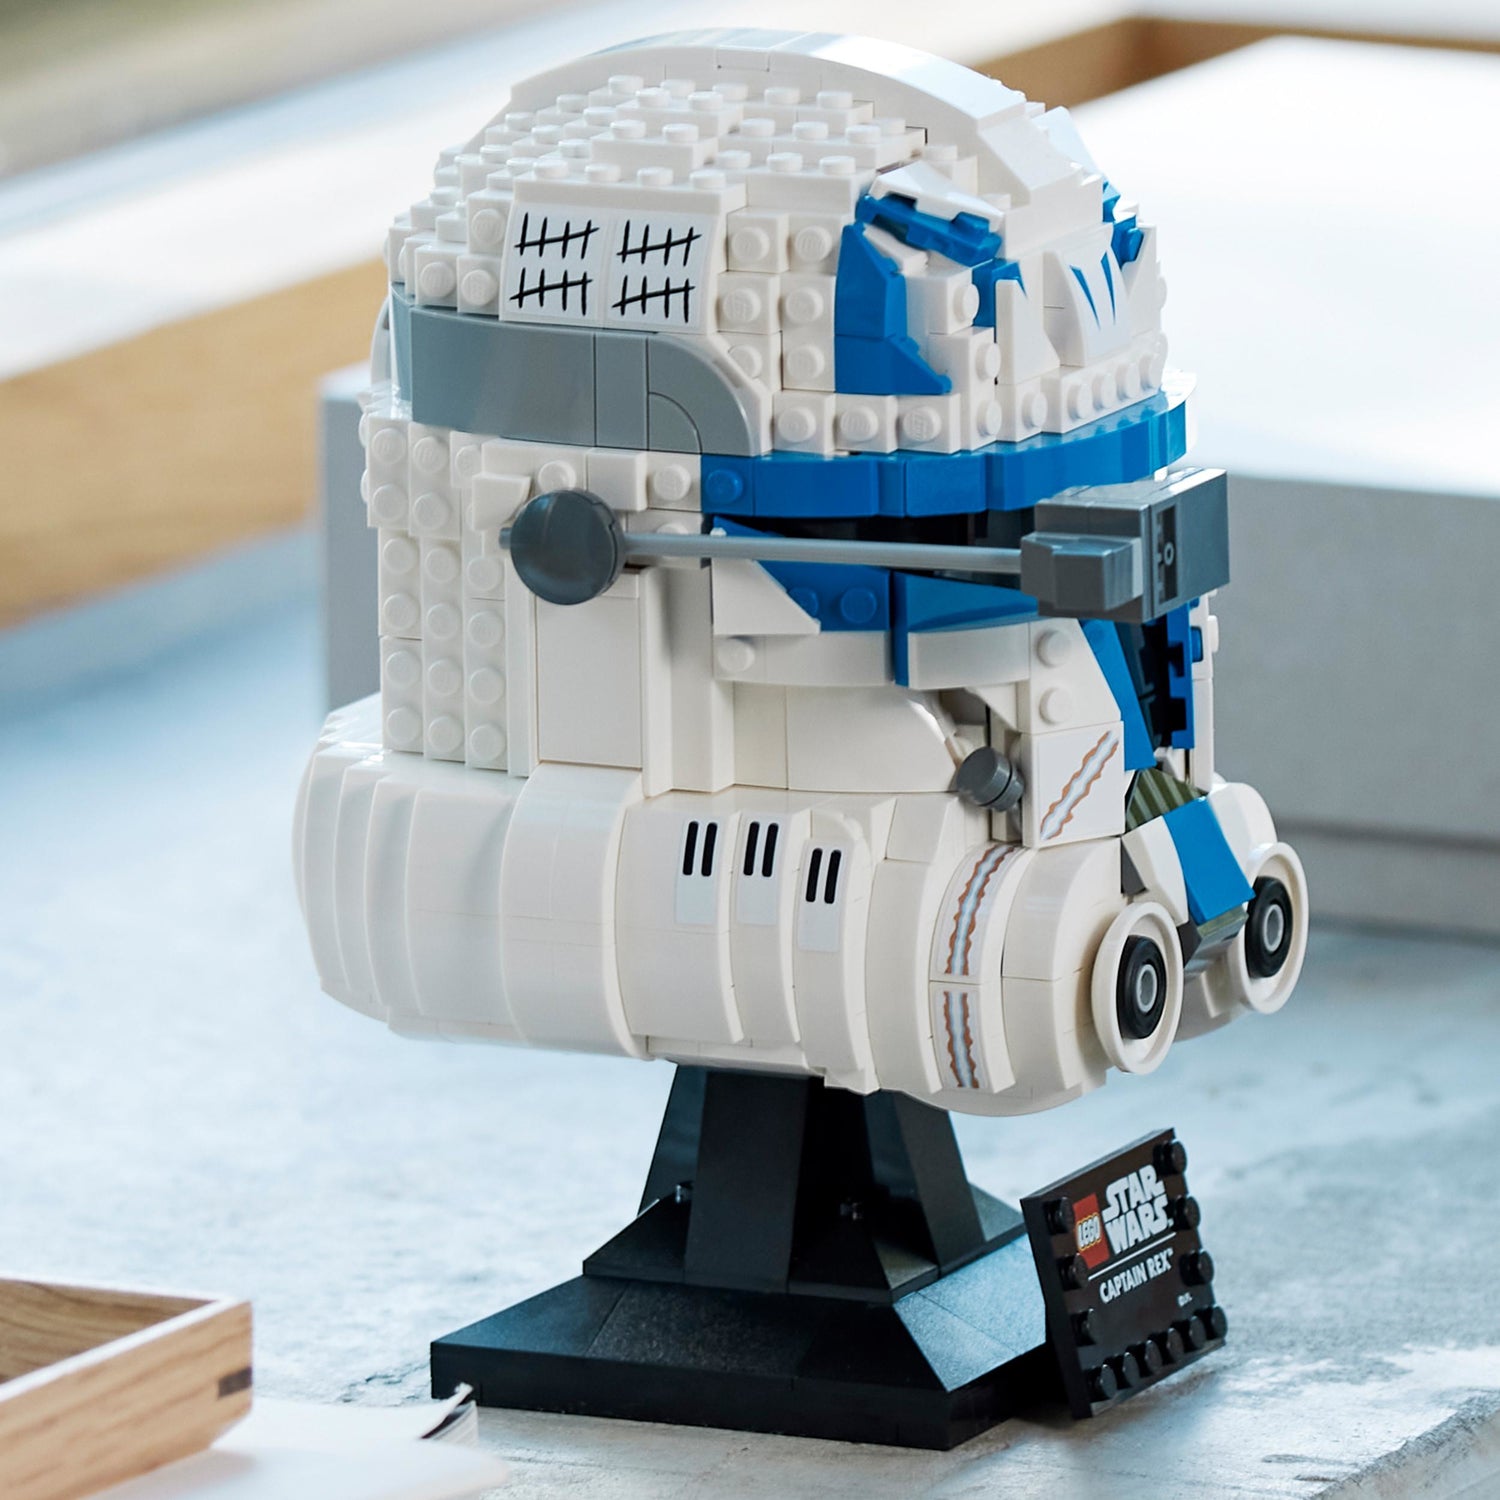 LEGO® Star Wars Captain Rex Helmet Set for Adults